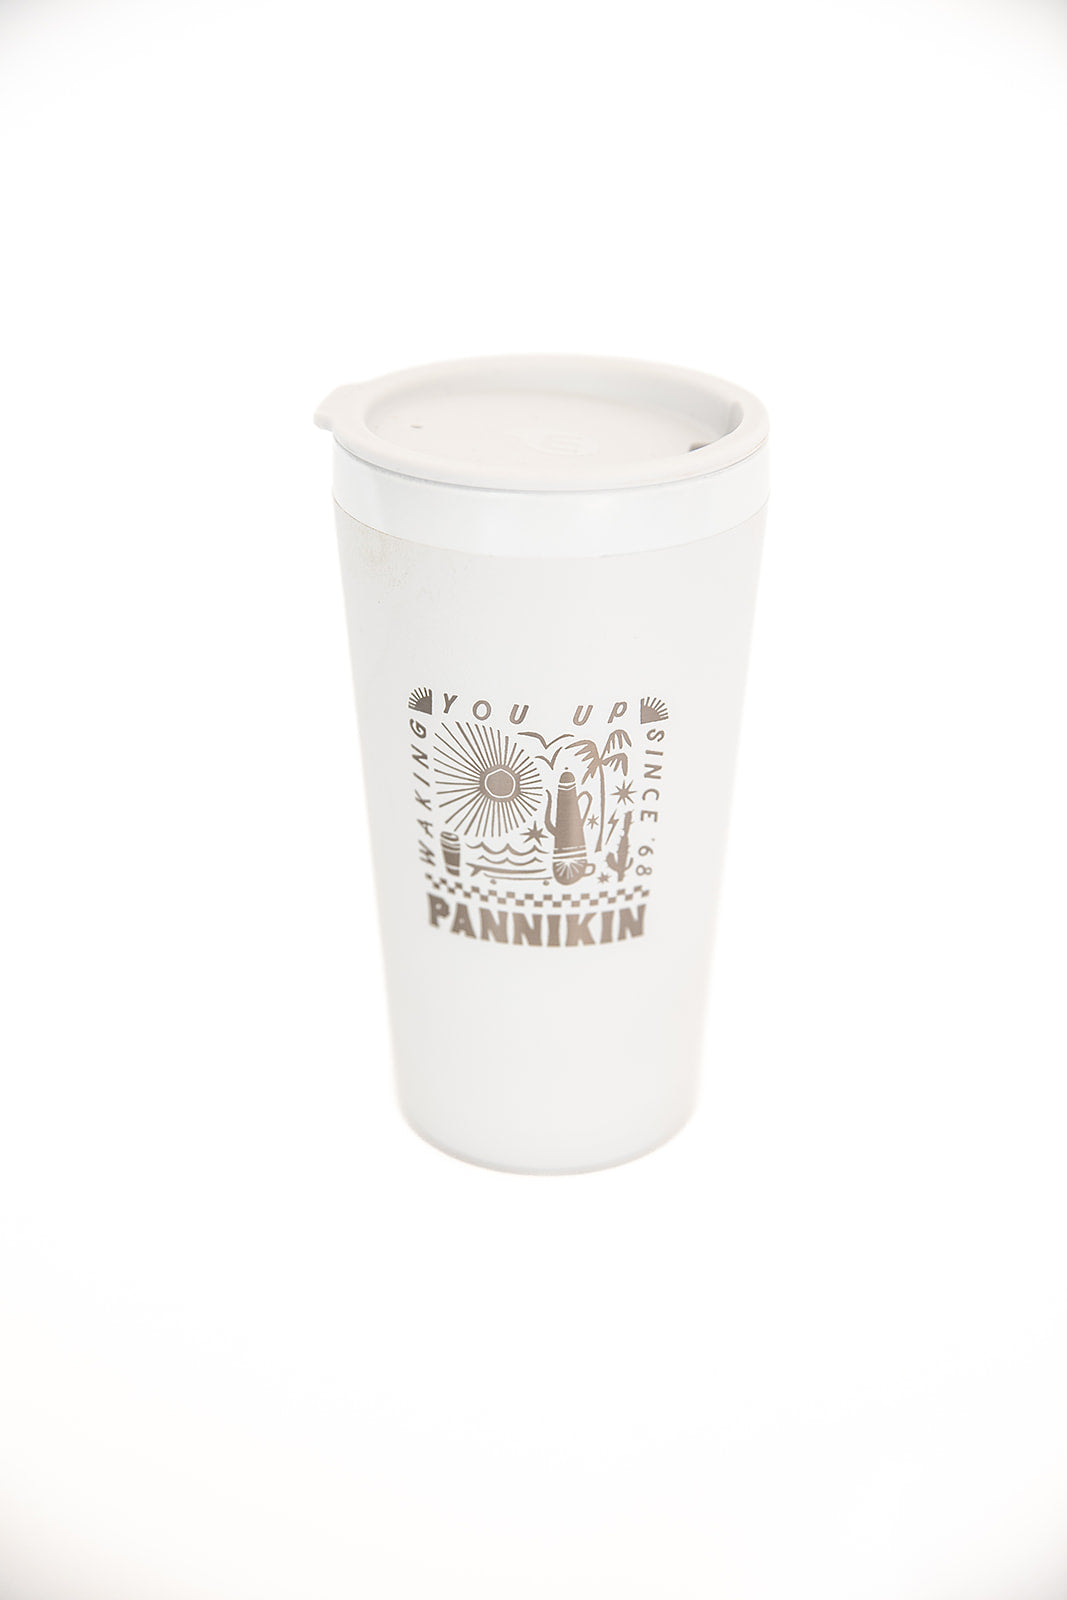 16oz Pannikin Ceramic Lined and Insulated Travel Mug